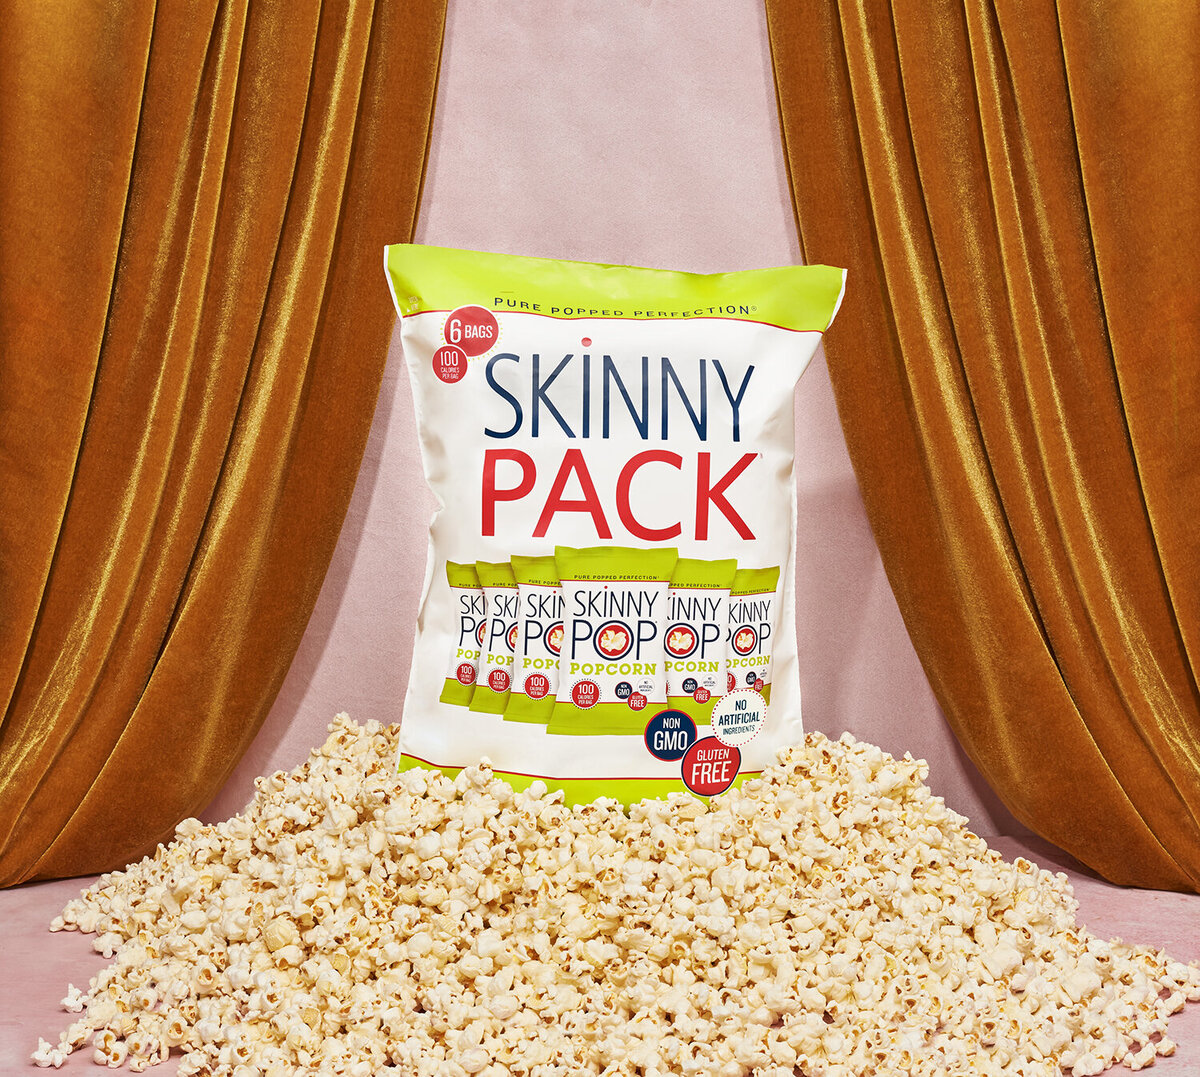 skinnypop skinny pack popcorn mountain